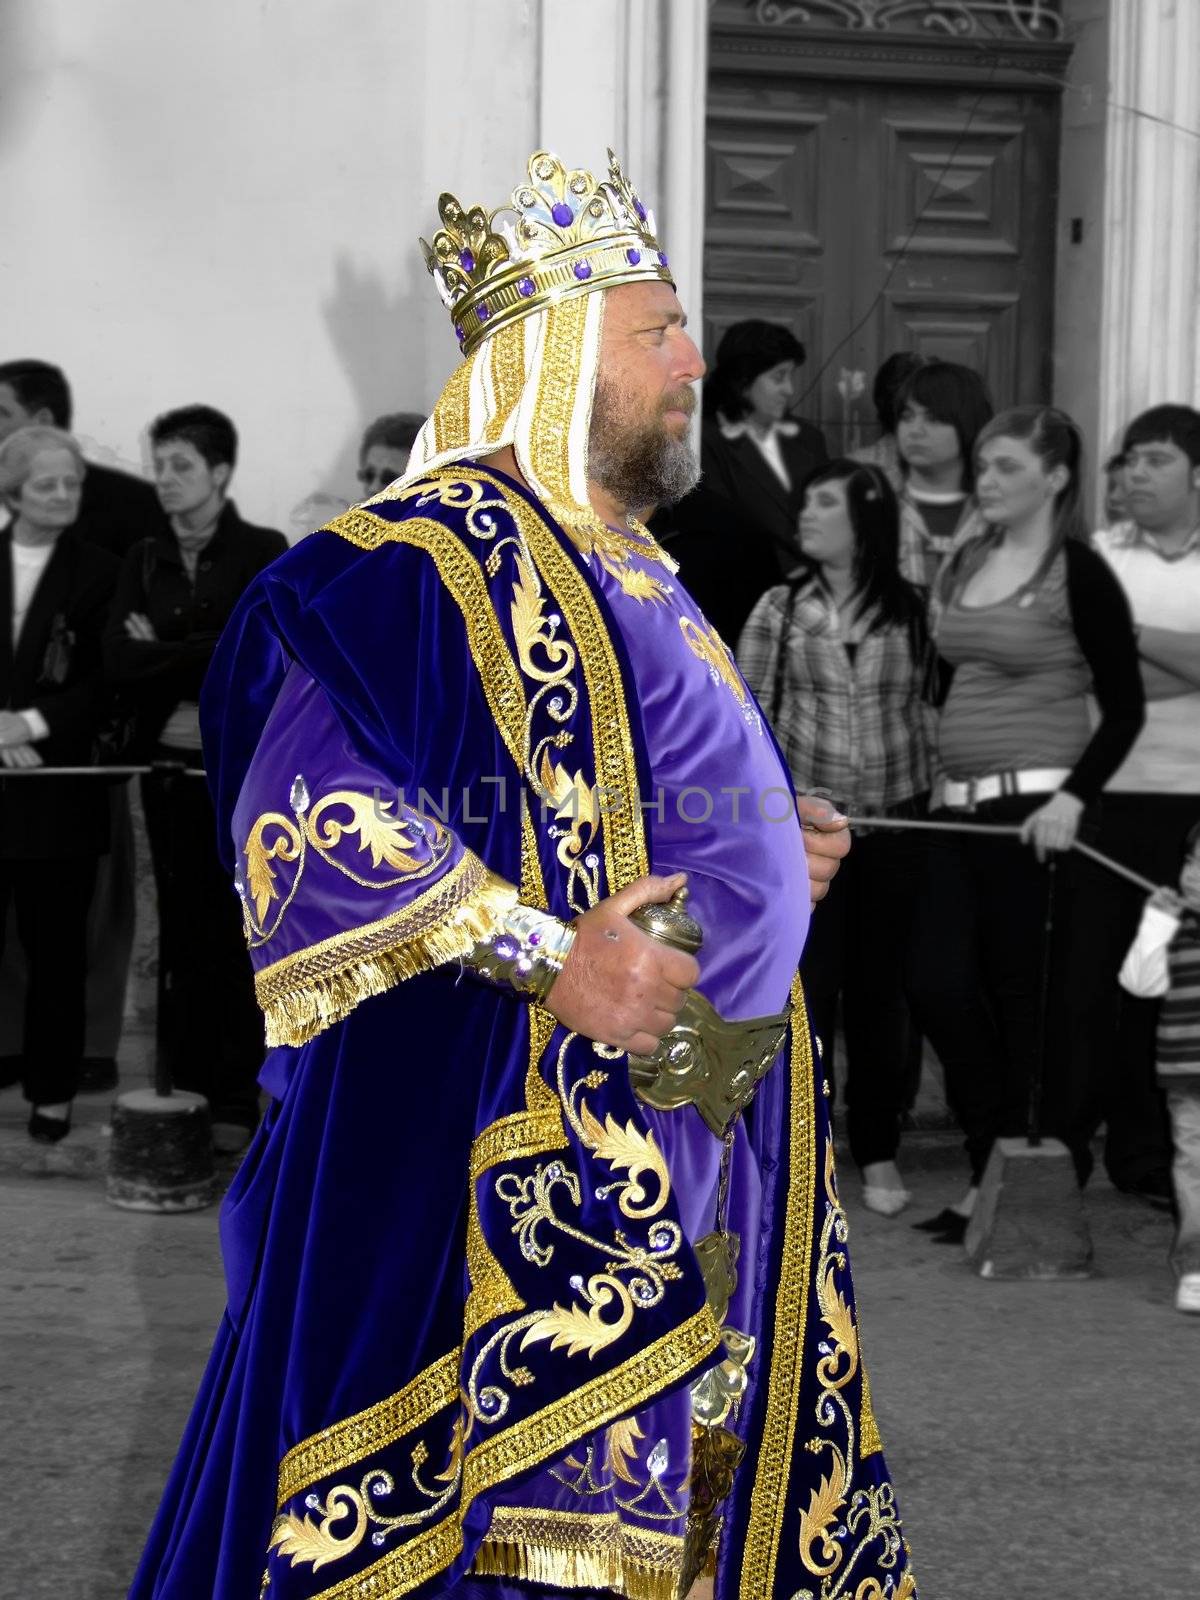 King Herod by PhotoWorks